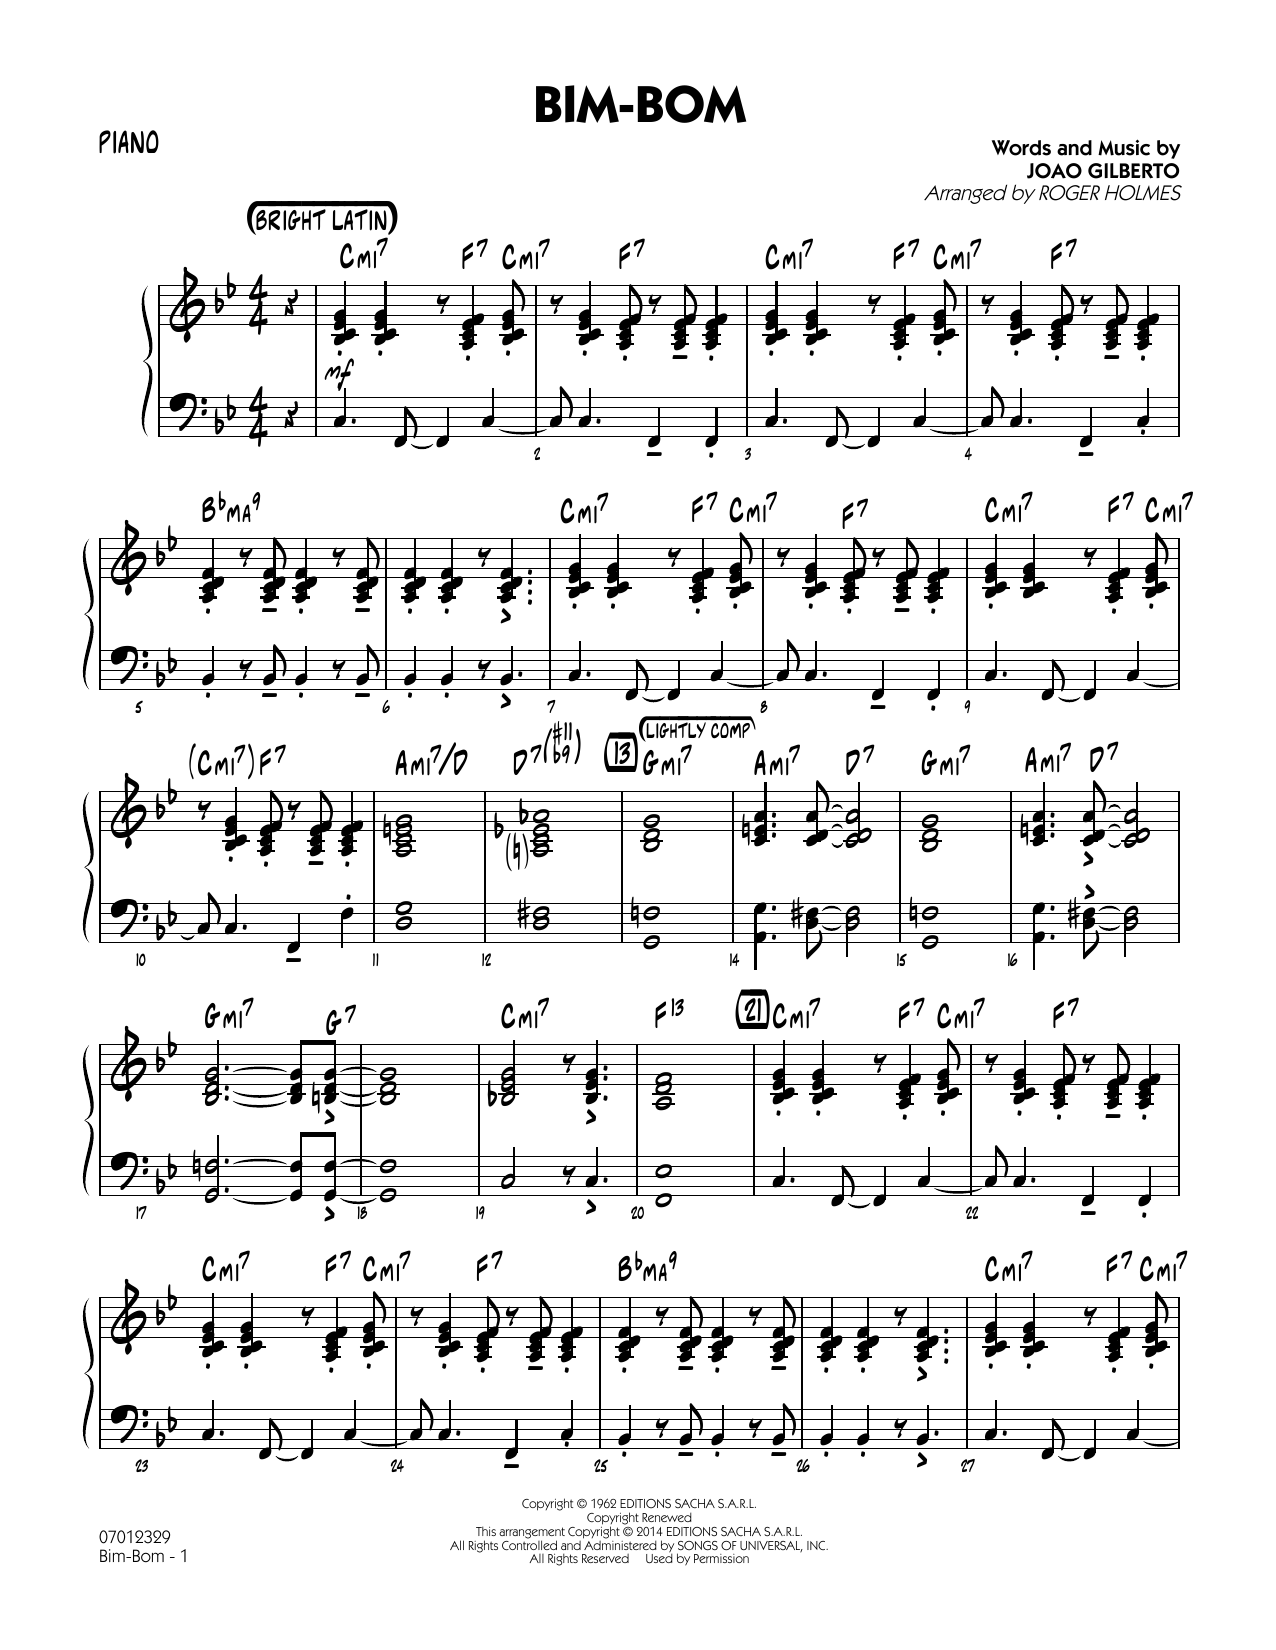 Roger Holmes Bim-Bom - Piano sheet music notes and chords. Download Printable PDF.